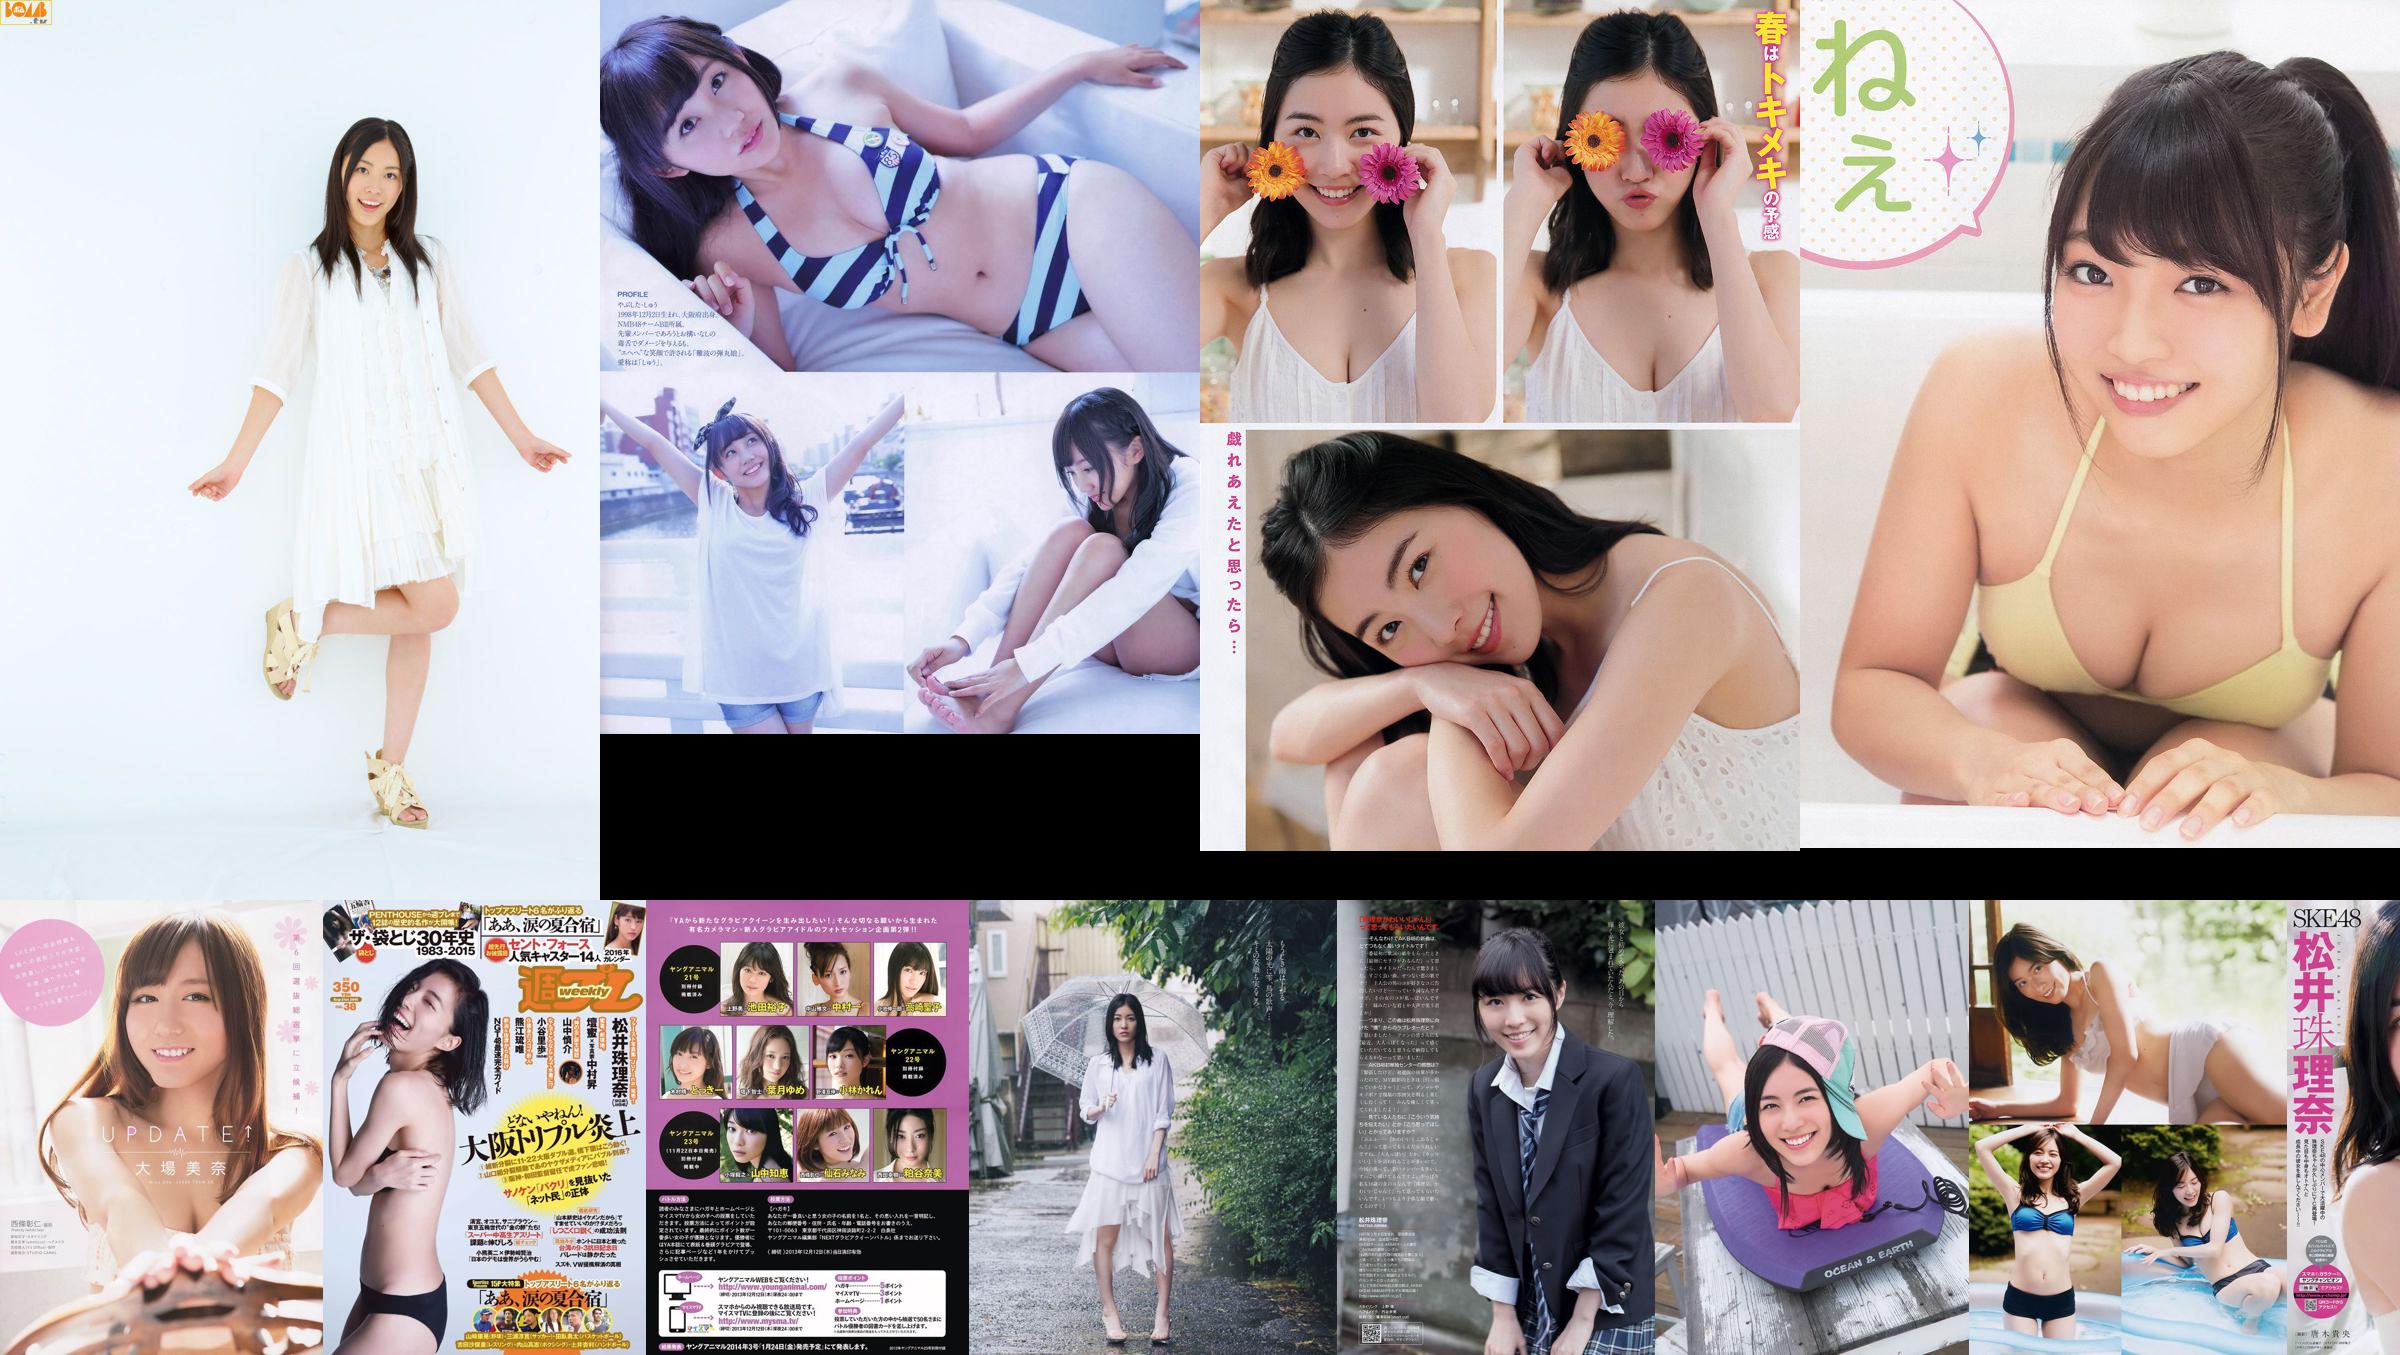 [Bomb Magazine] 2014 No.07 Matsui Jurina Watanabe 고시마 미유키 이리 야마 마코 사토 공주 포토 매거진 No.a4fd88 페이지 1